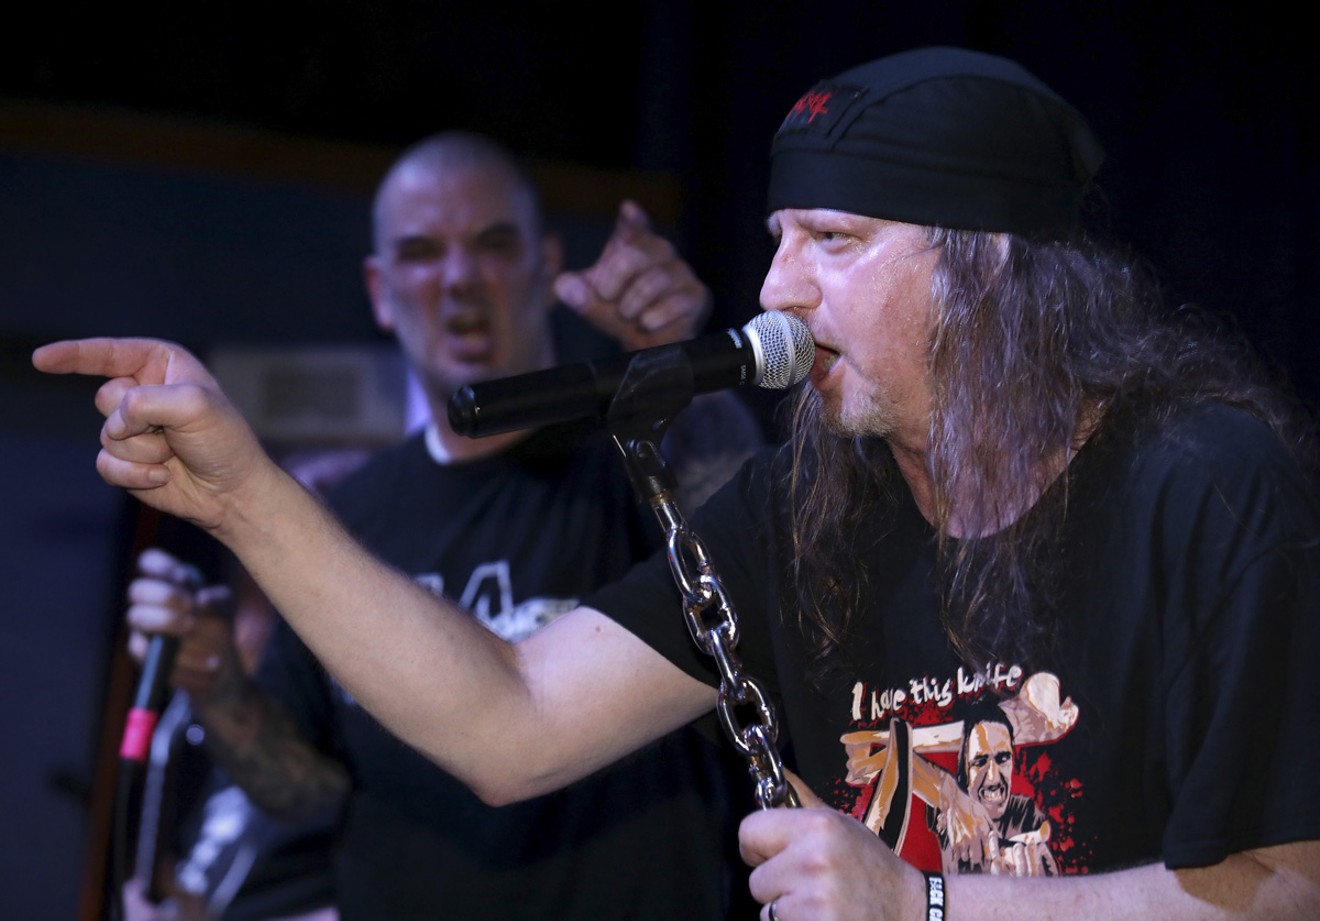 Bruce Corbitt onstage with ex-Pantera frontman Philip Anselmo